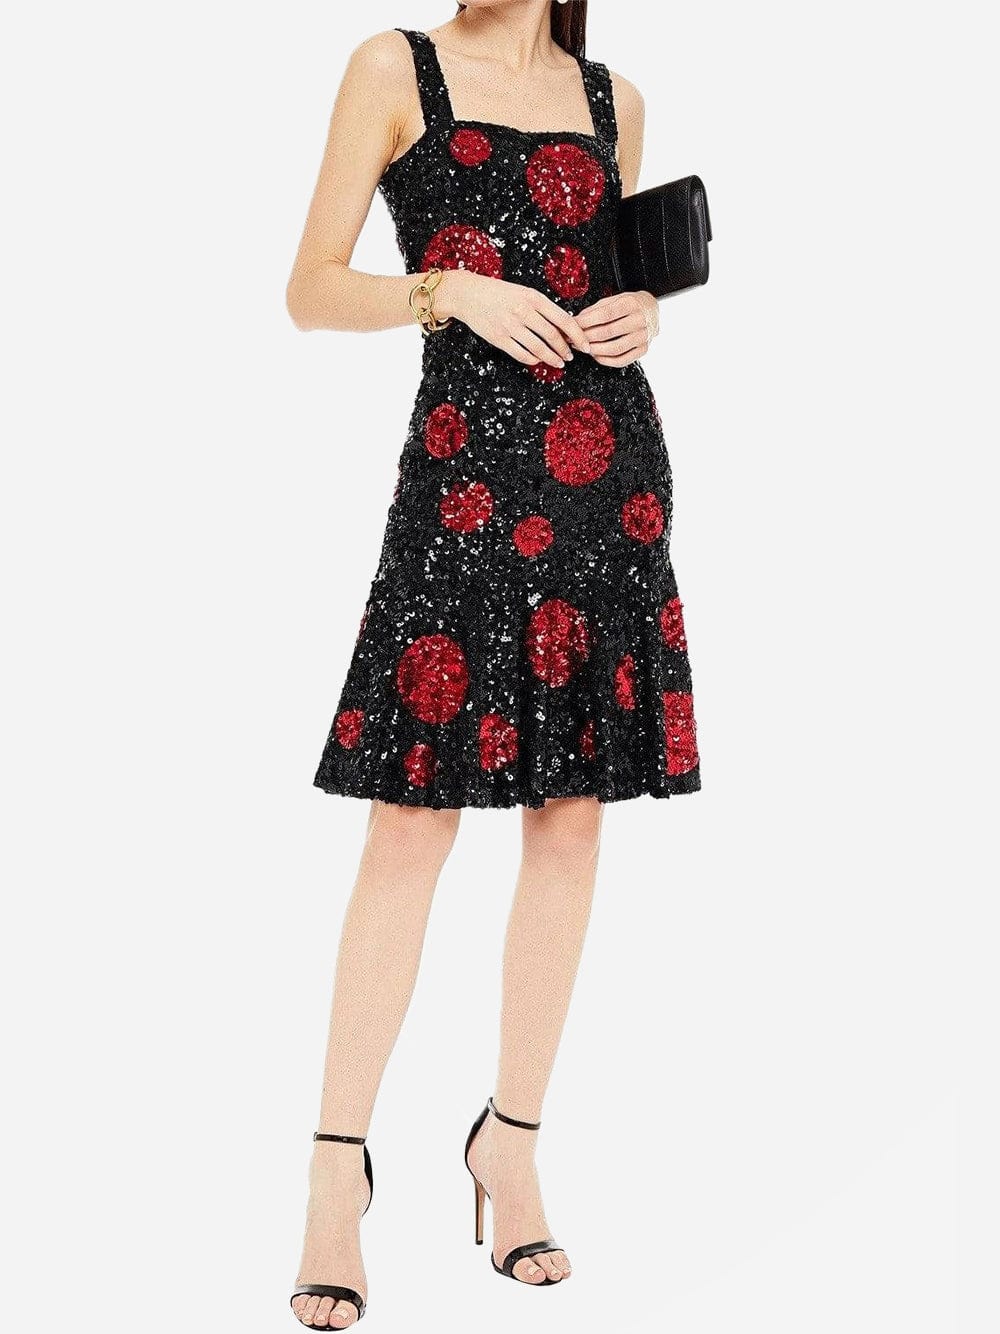 Dolce & Gabbana Sequined Polka-Dot Dress